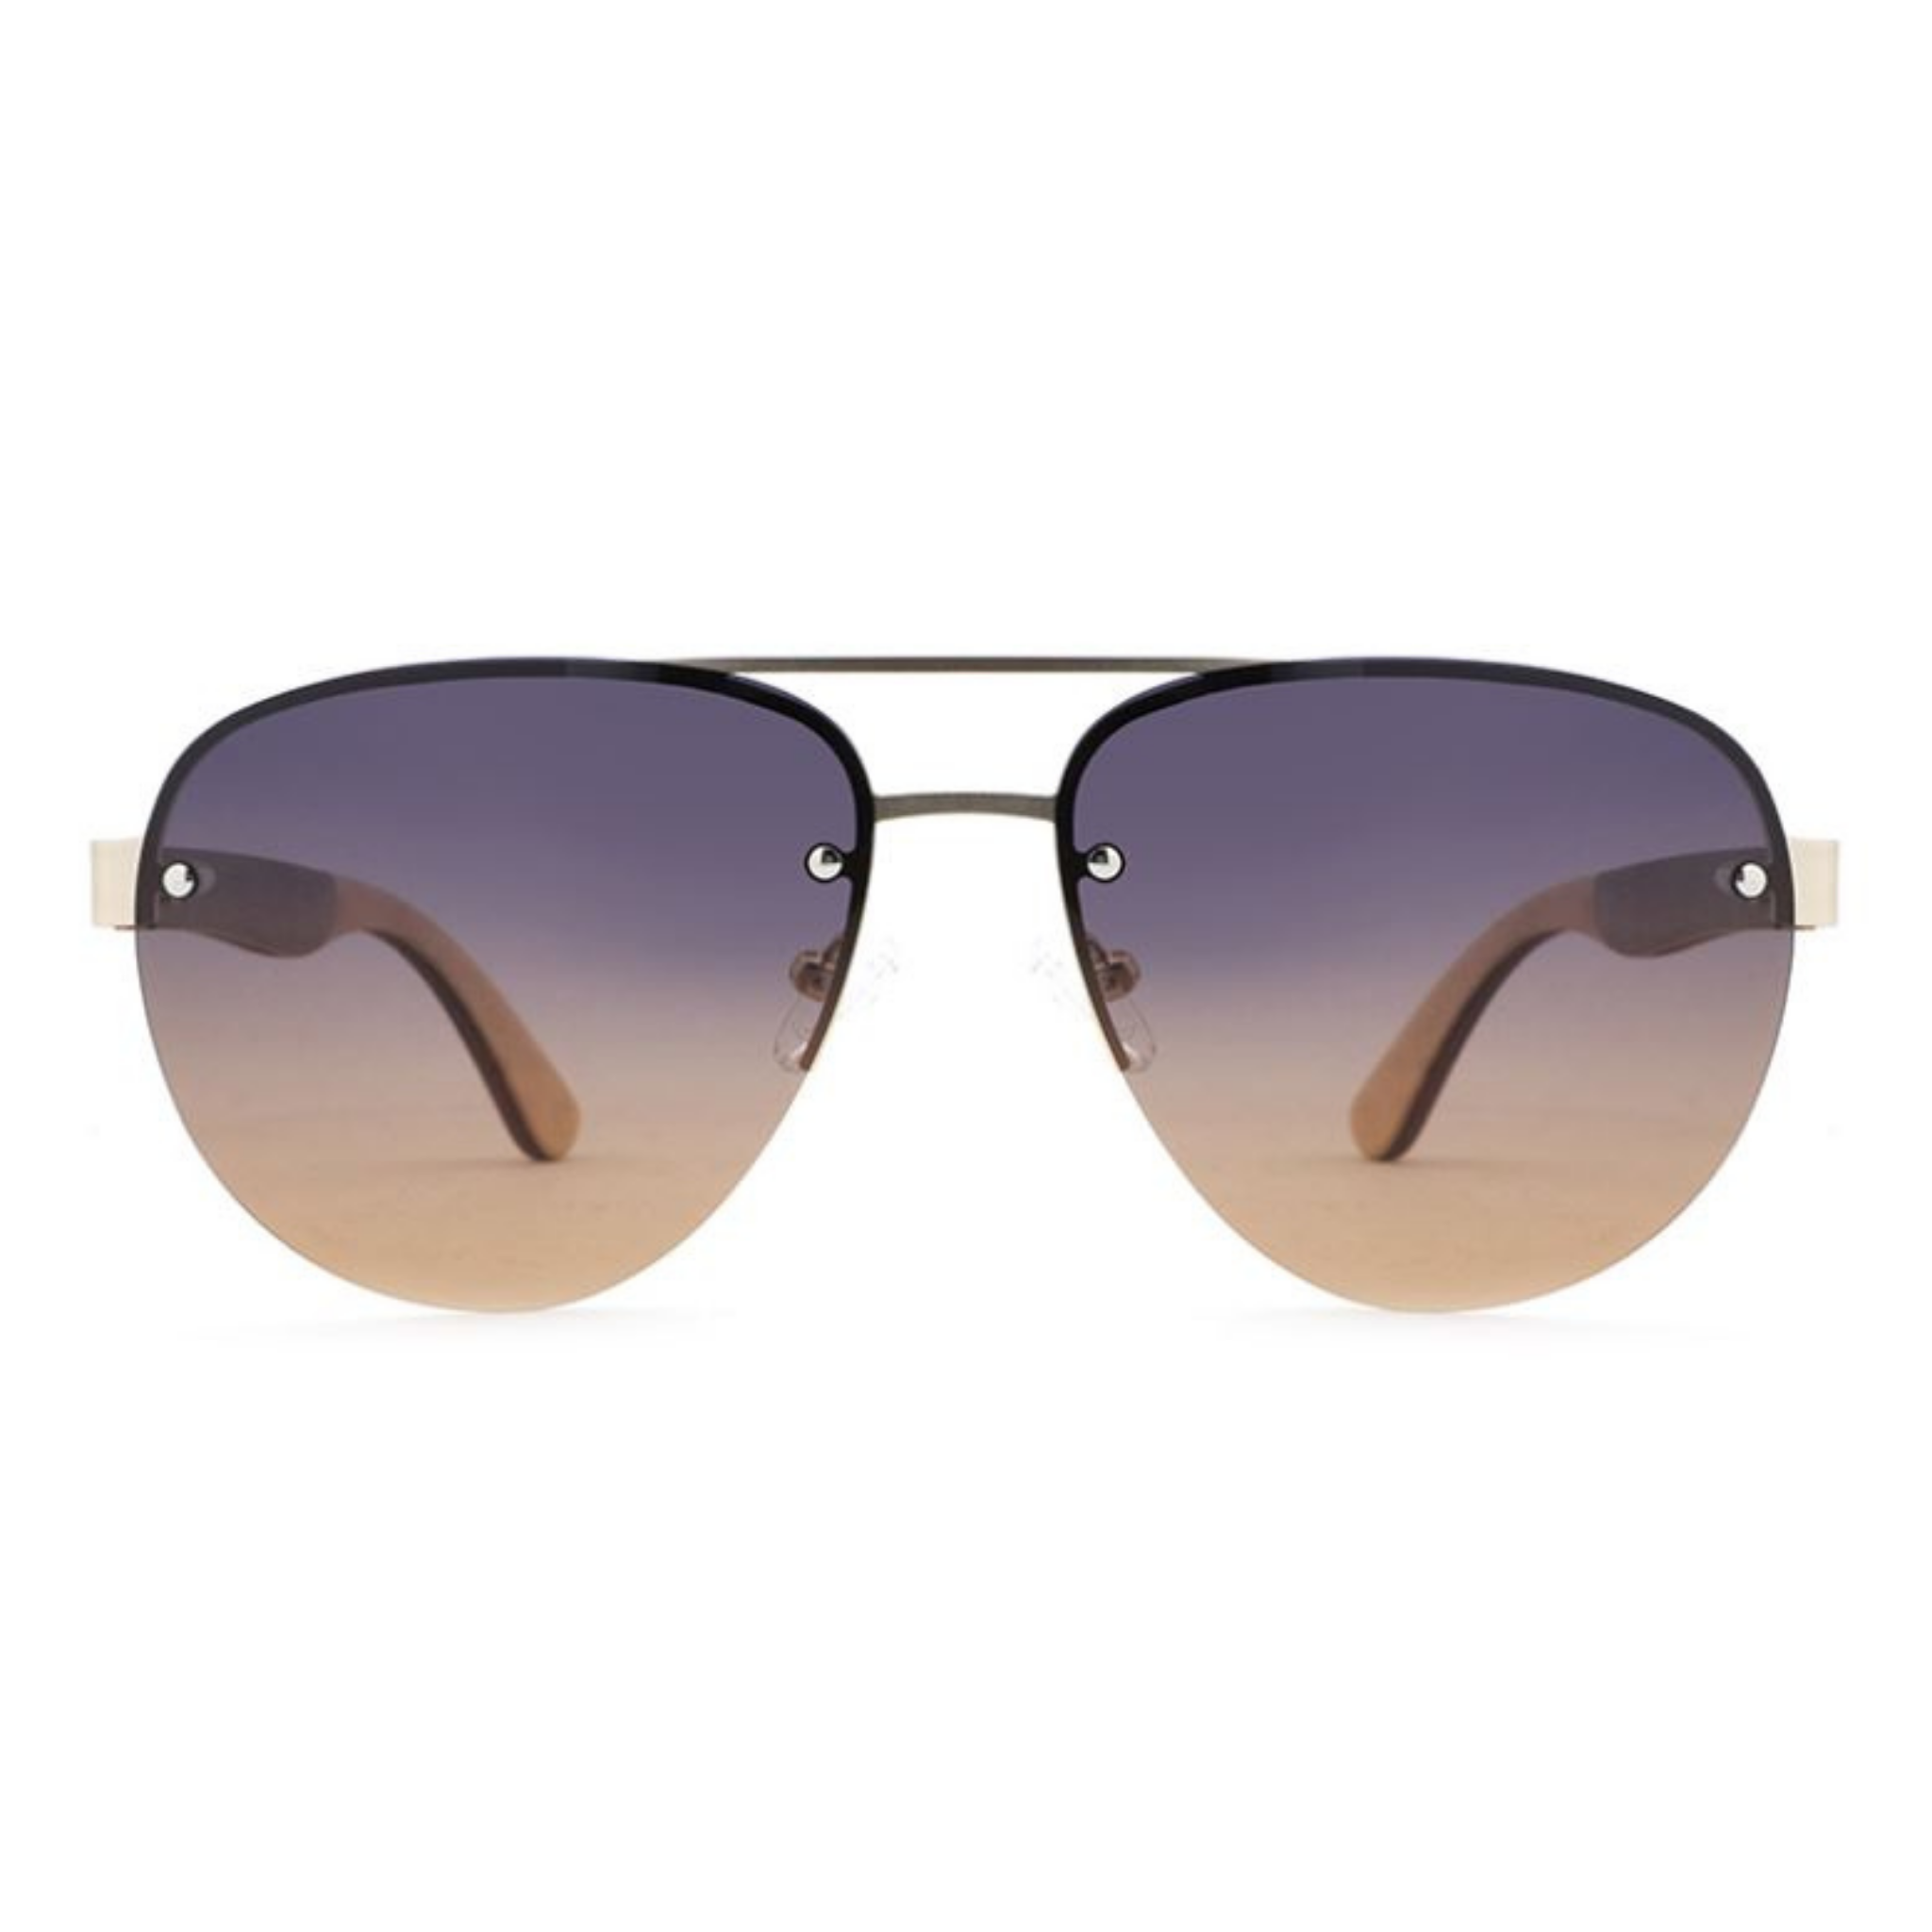 B.O.S.S. | Fresh Sunglasses - Blackwood Premium